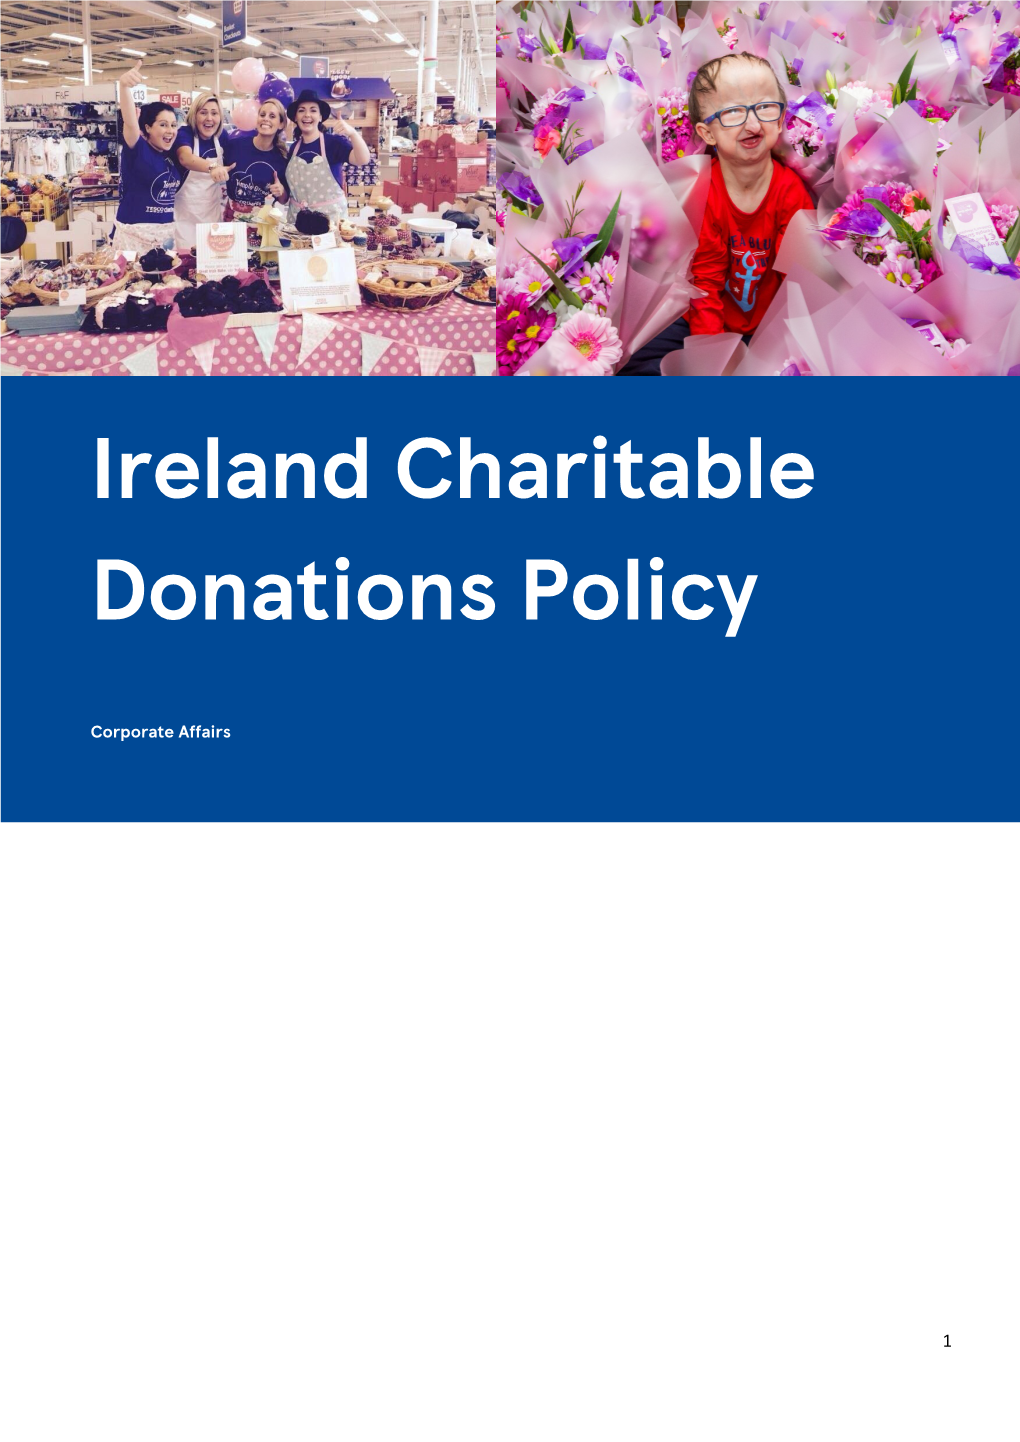 Ireland Charitable Donations Policy